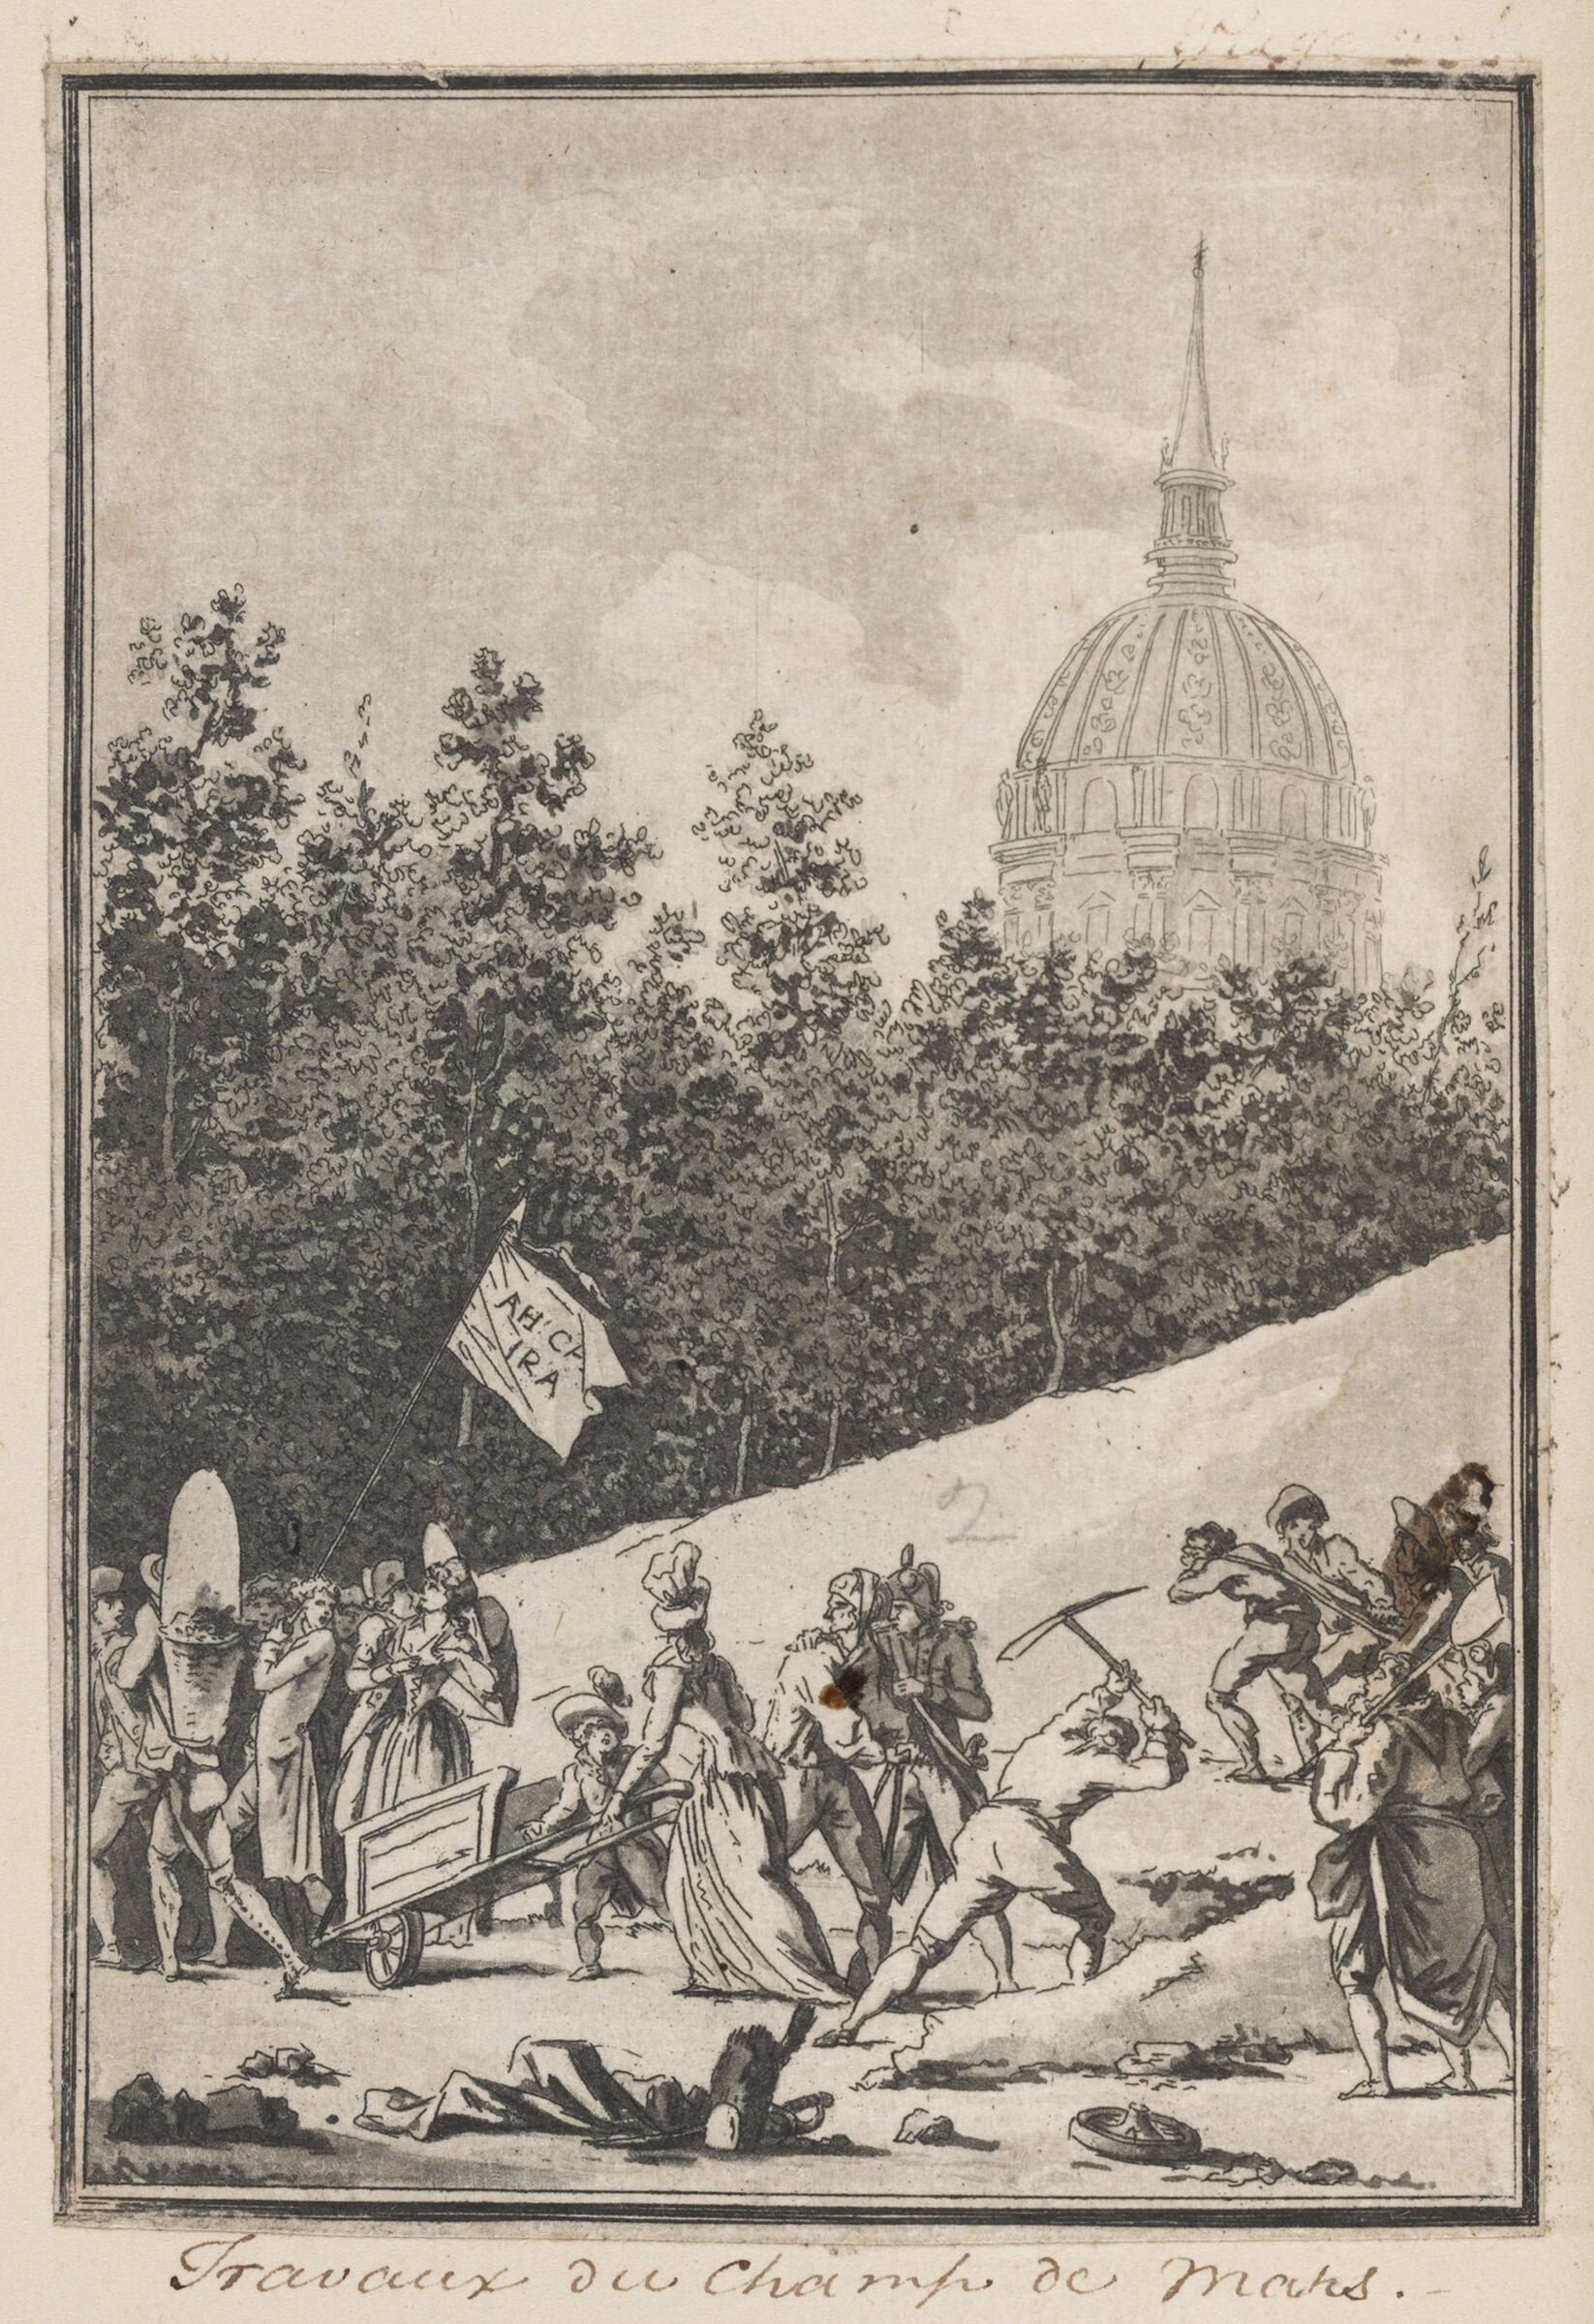 Work On The Champ De Mars (7 July 1790)